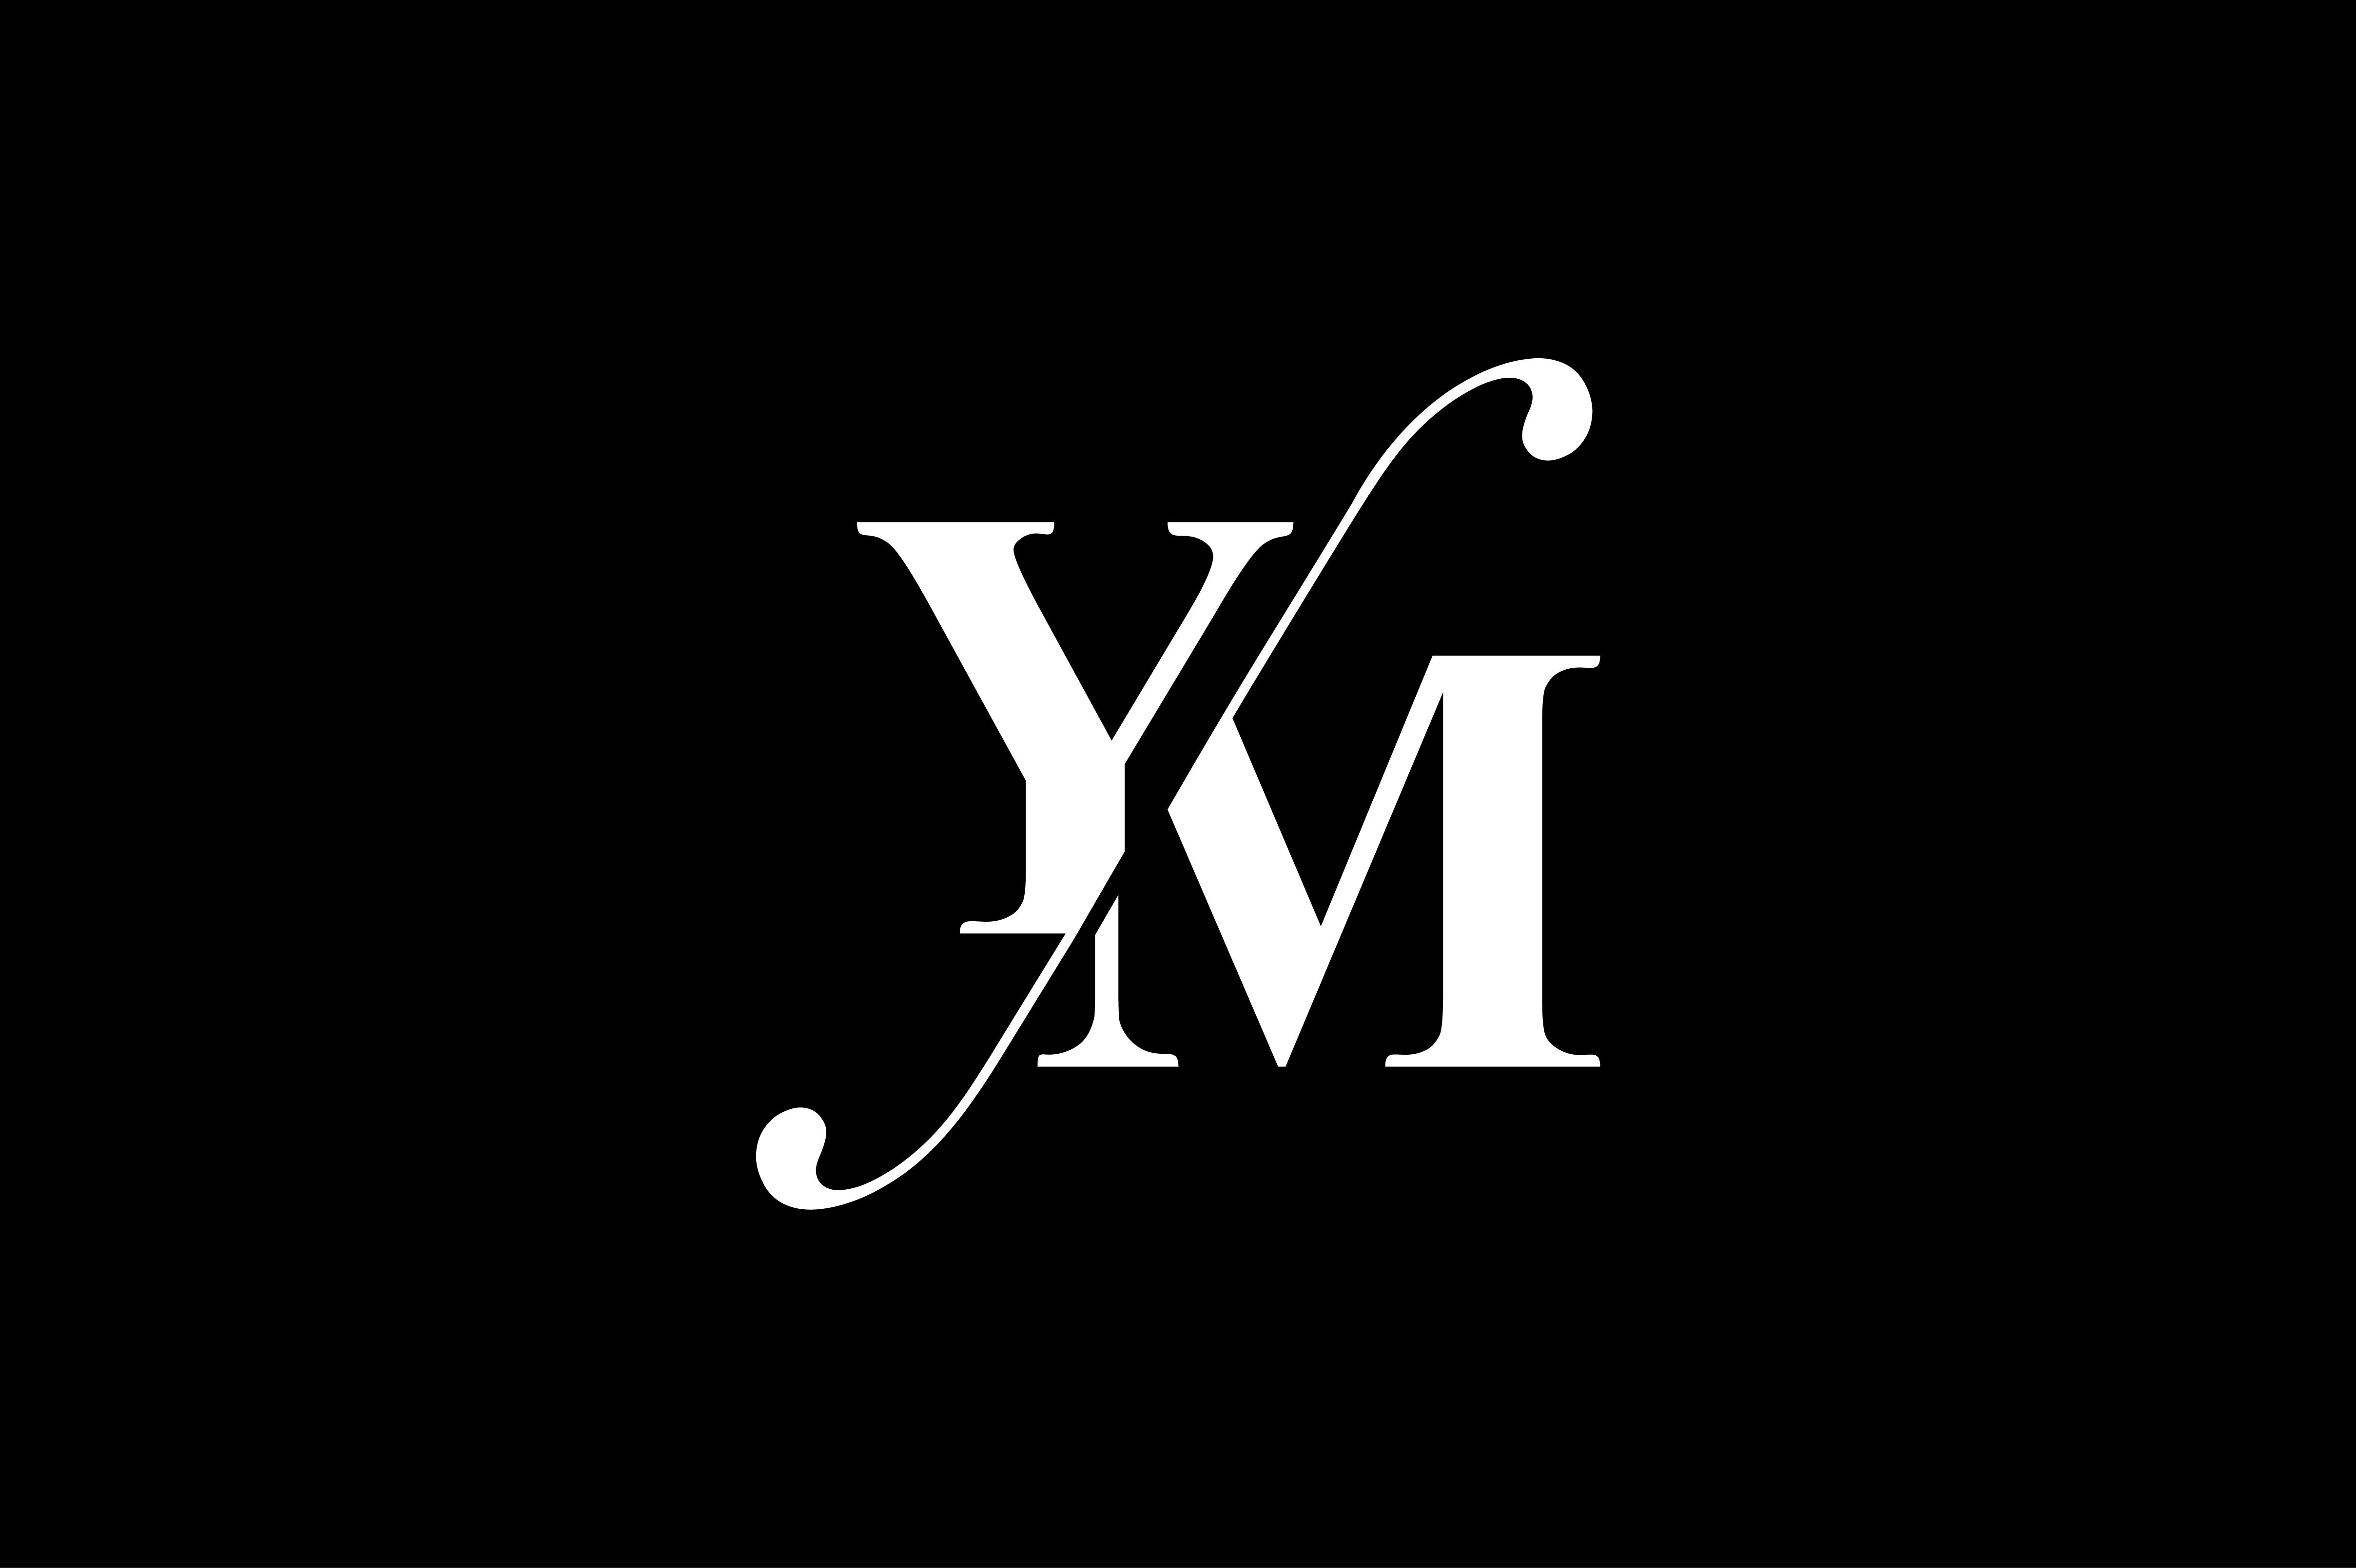 Ym Monogram Logo Design By Vectorseller Thehungryjpeg Com